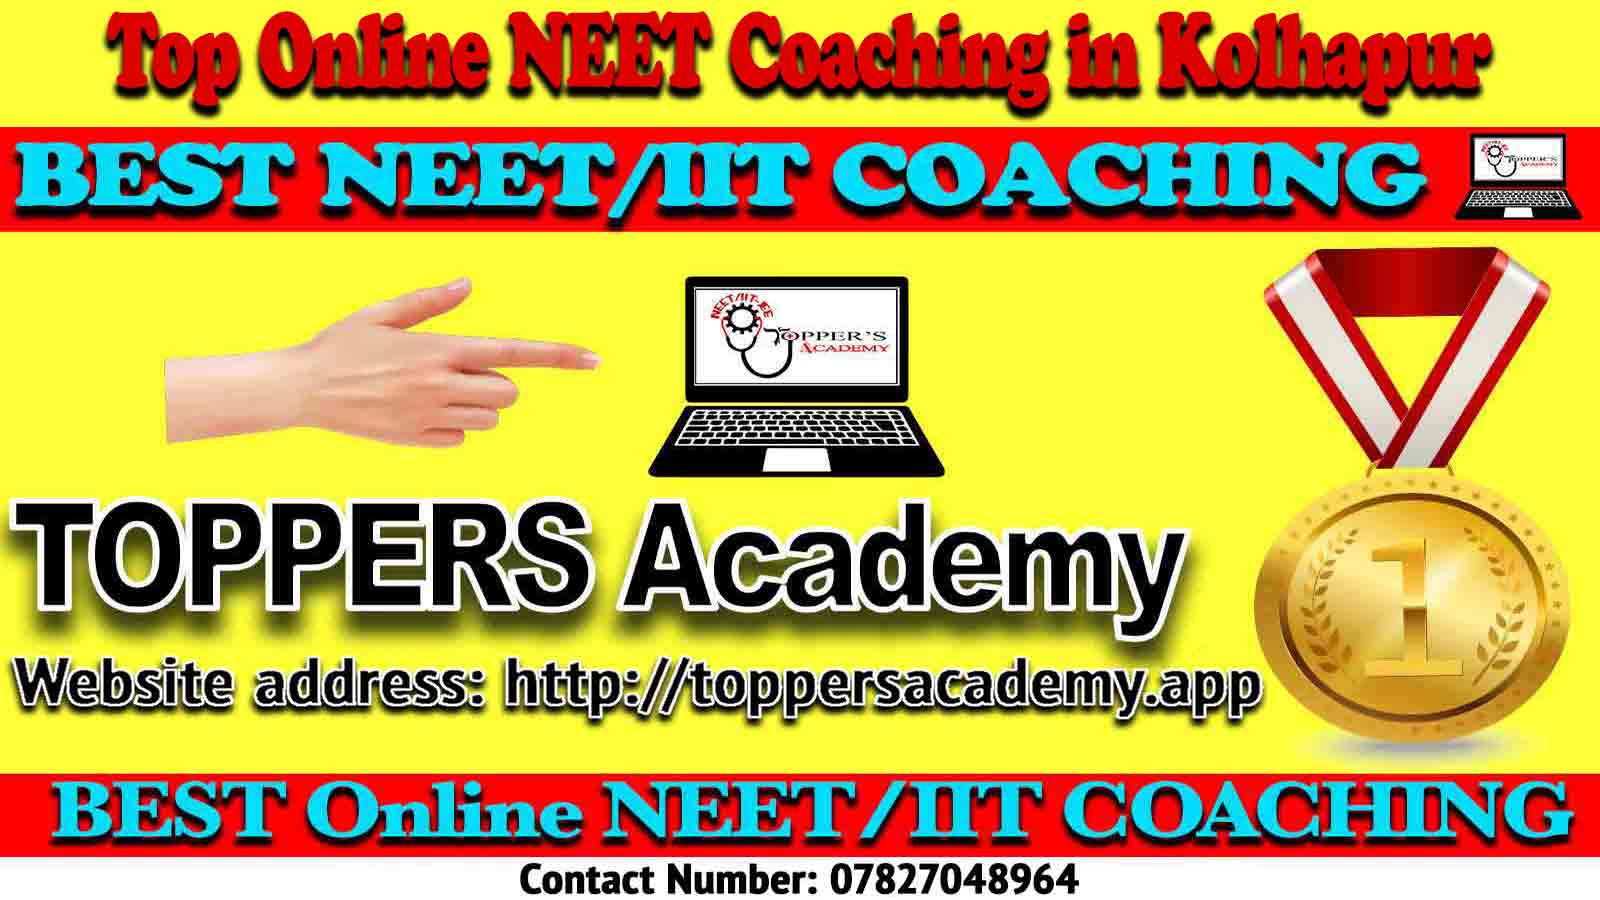 Best Online NEET Coaching in Kolhapur